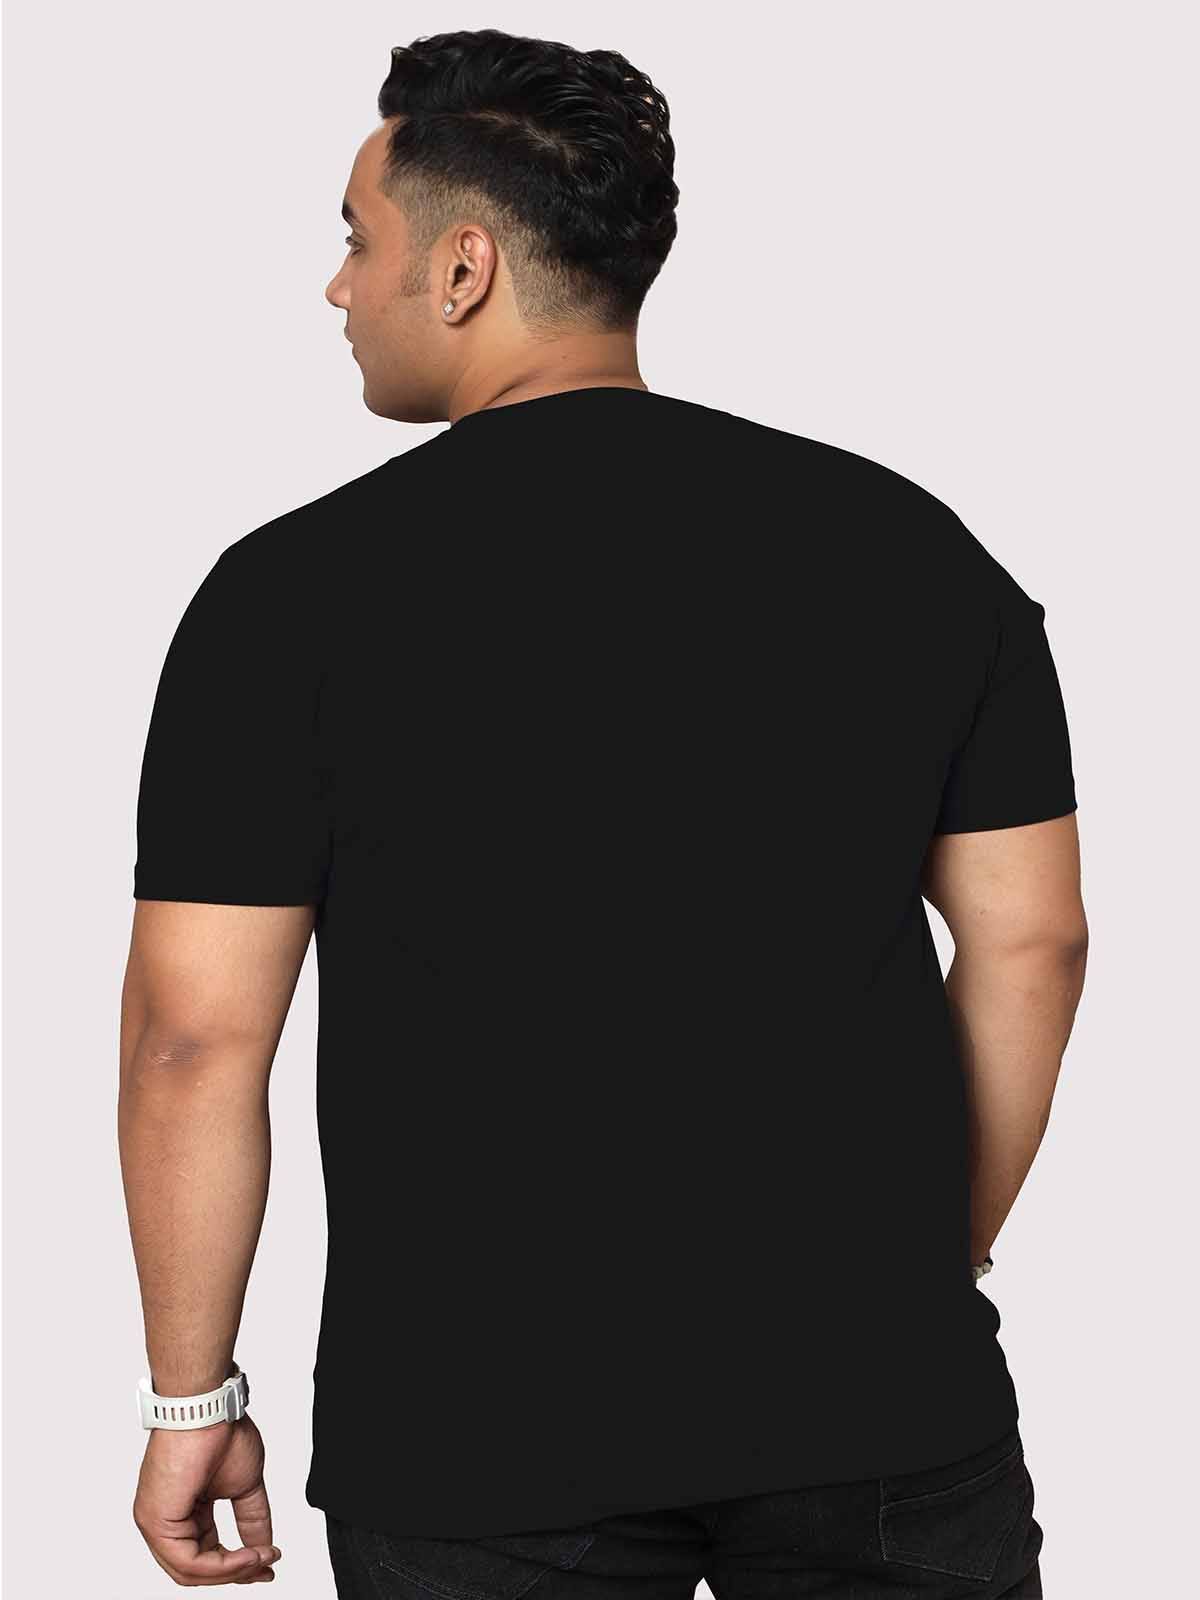 Men Plus Size Black Colorful Graphic Printed Round Neck T-Shirt - Guniaa Fashions